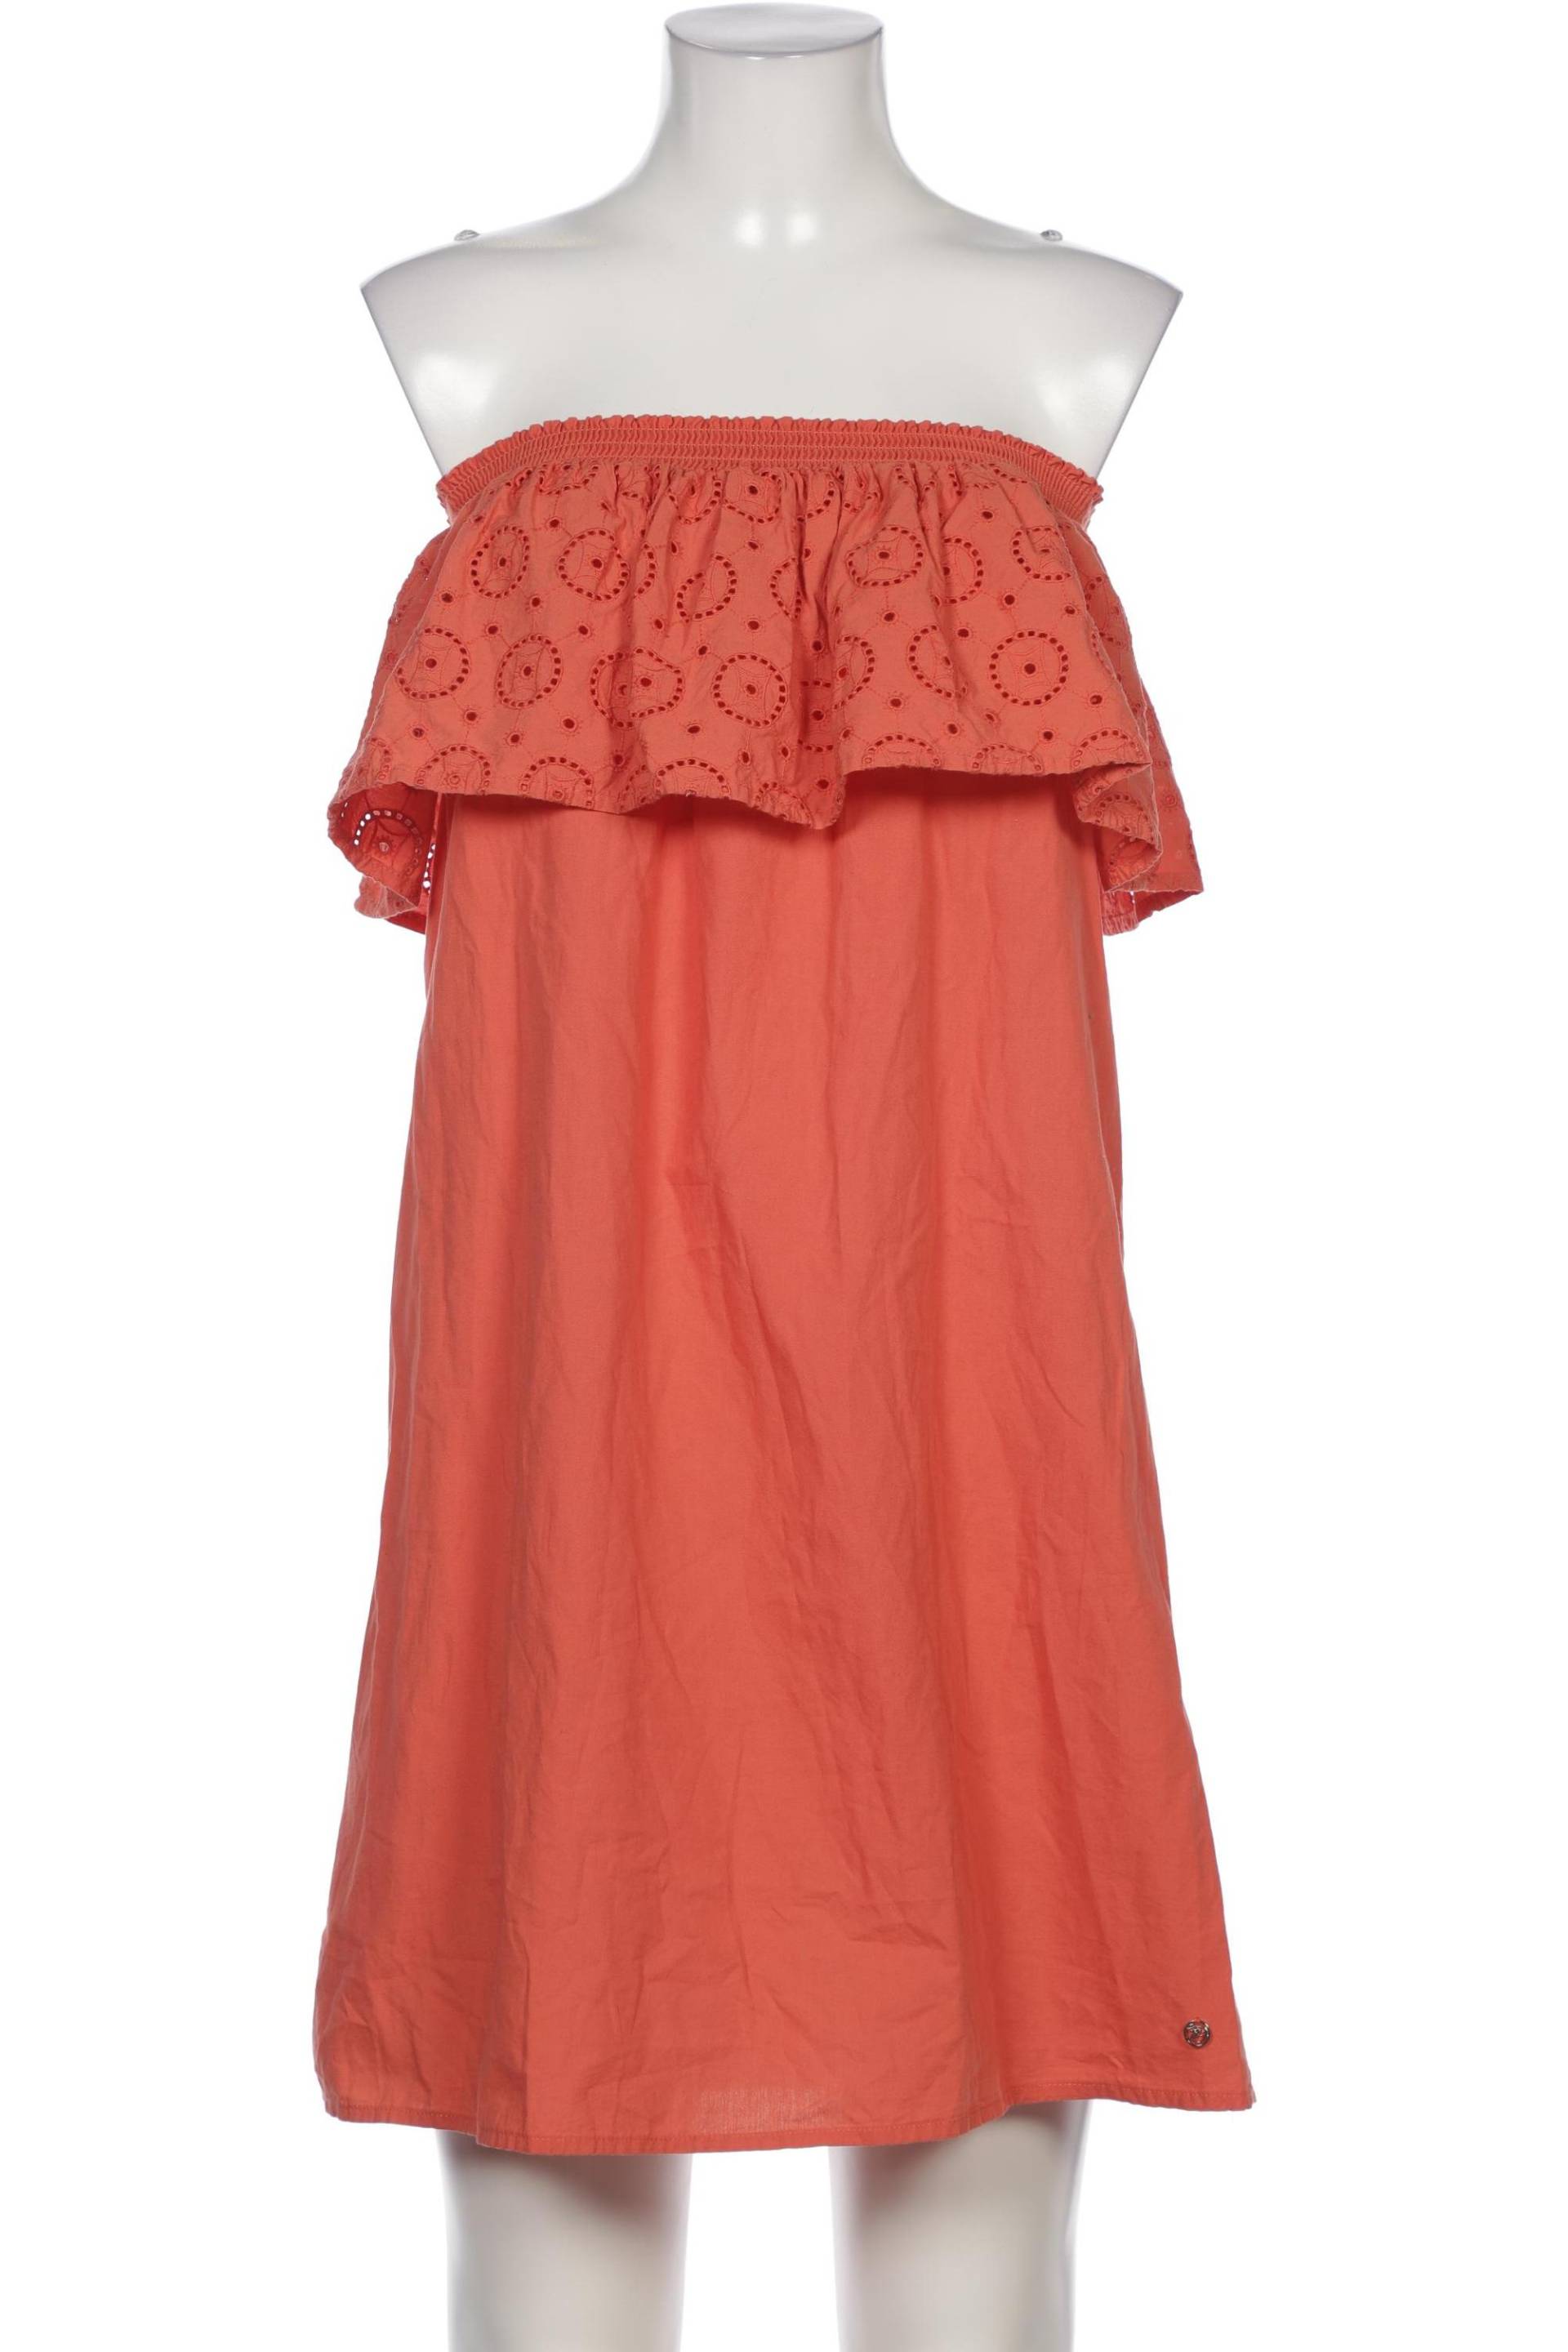 TOM TAILOR Denim Damen Kleid, orange von Tom Tailor Denim